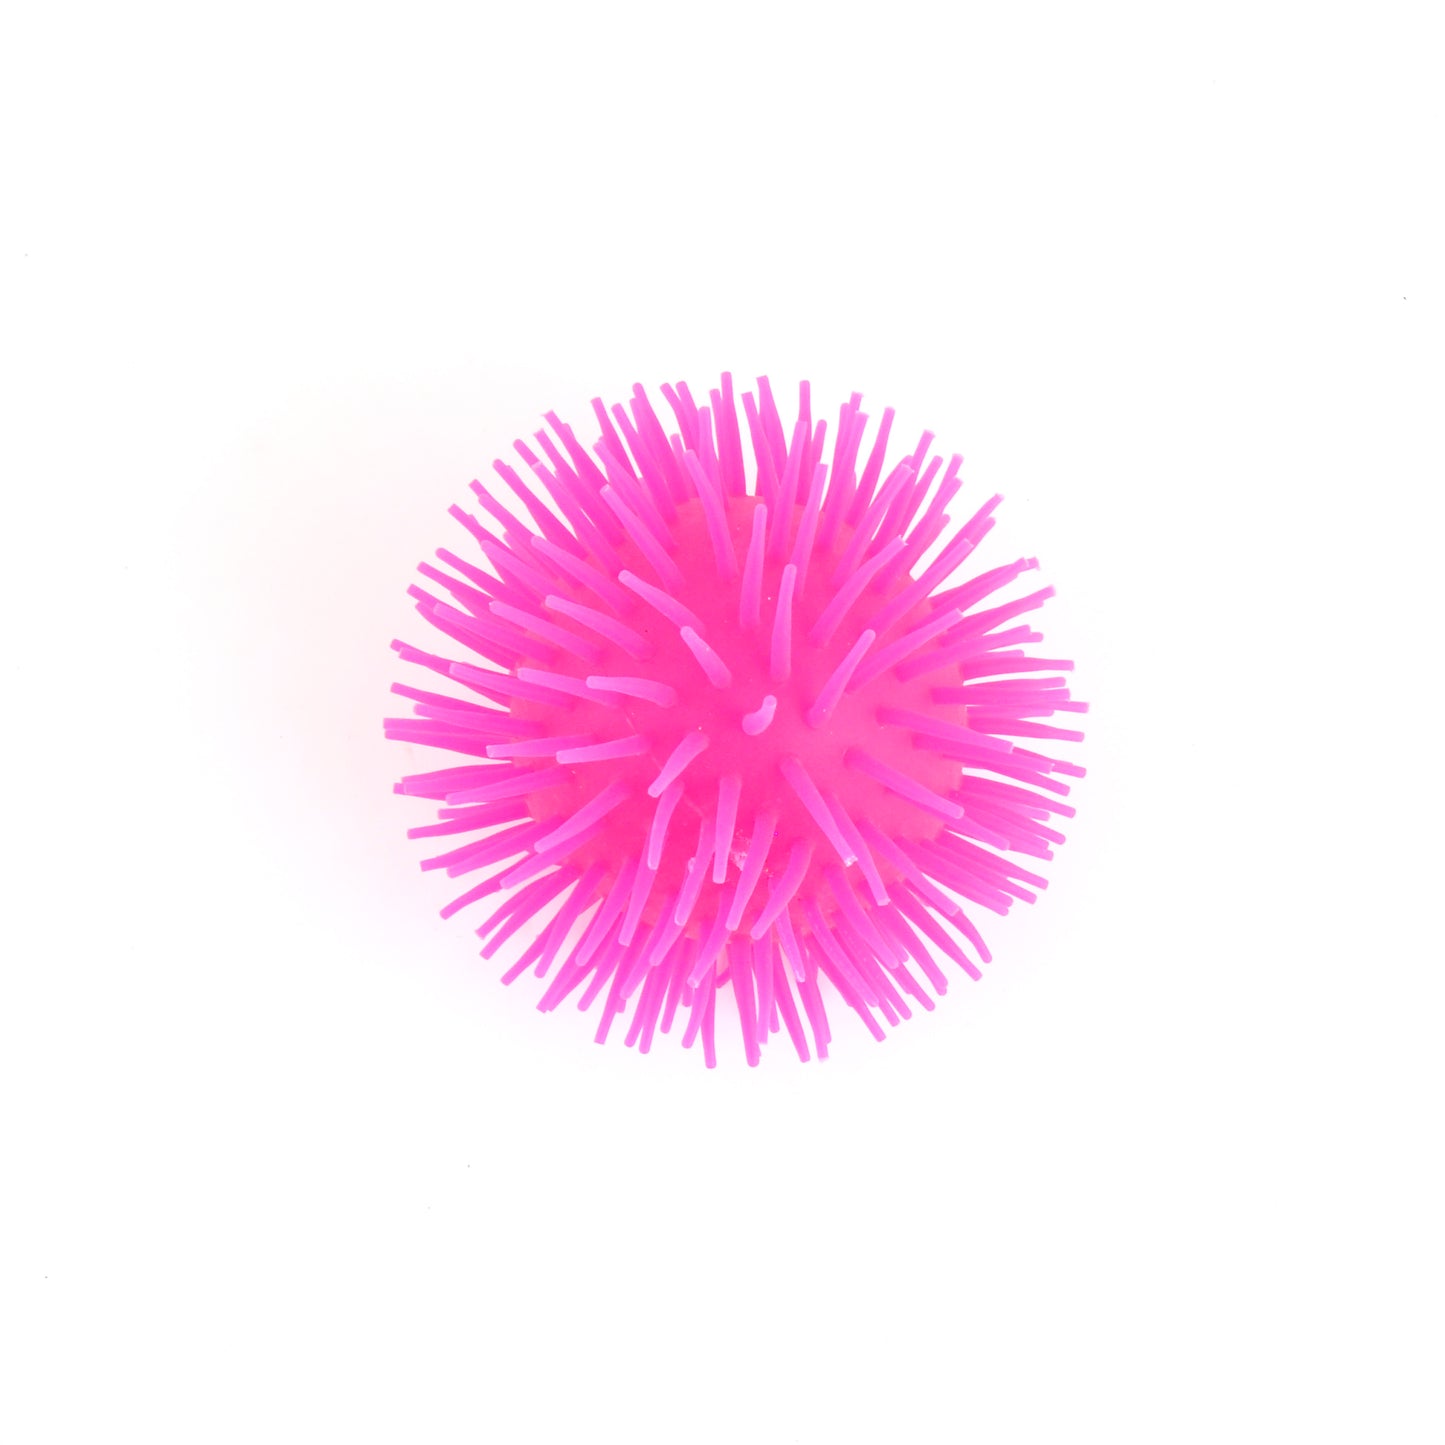 KaiserKids Spiky Squish Ball - PINK